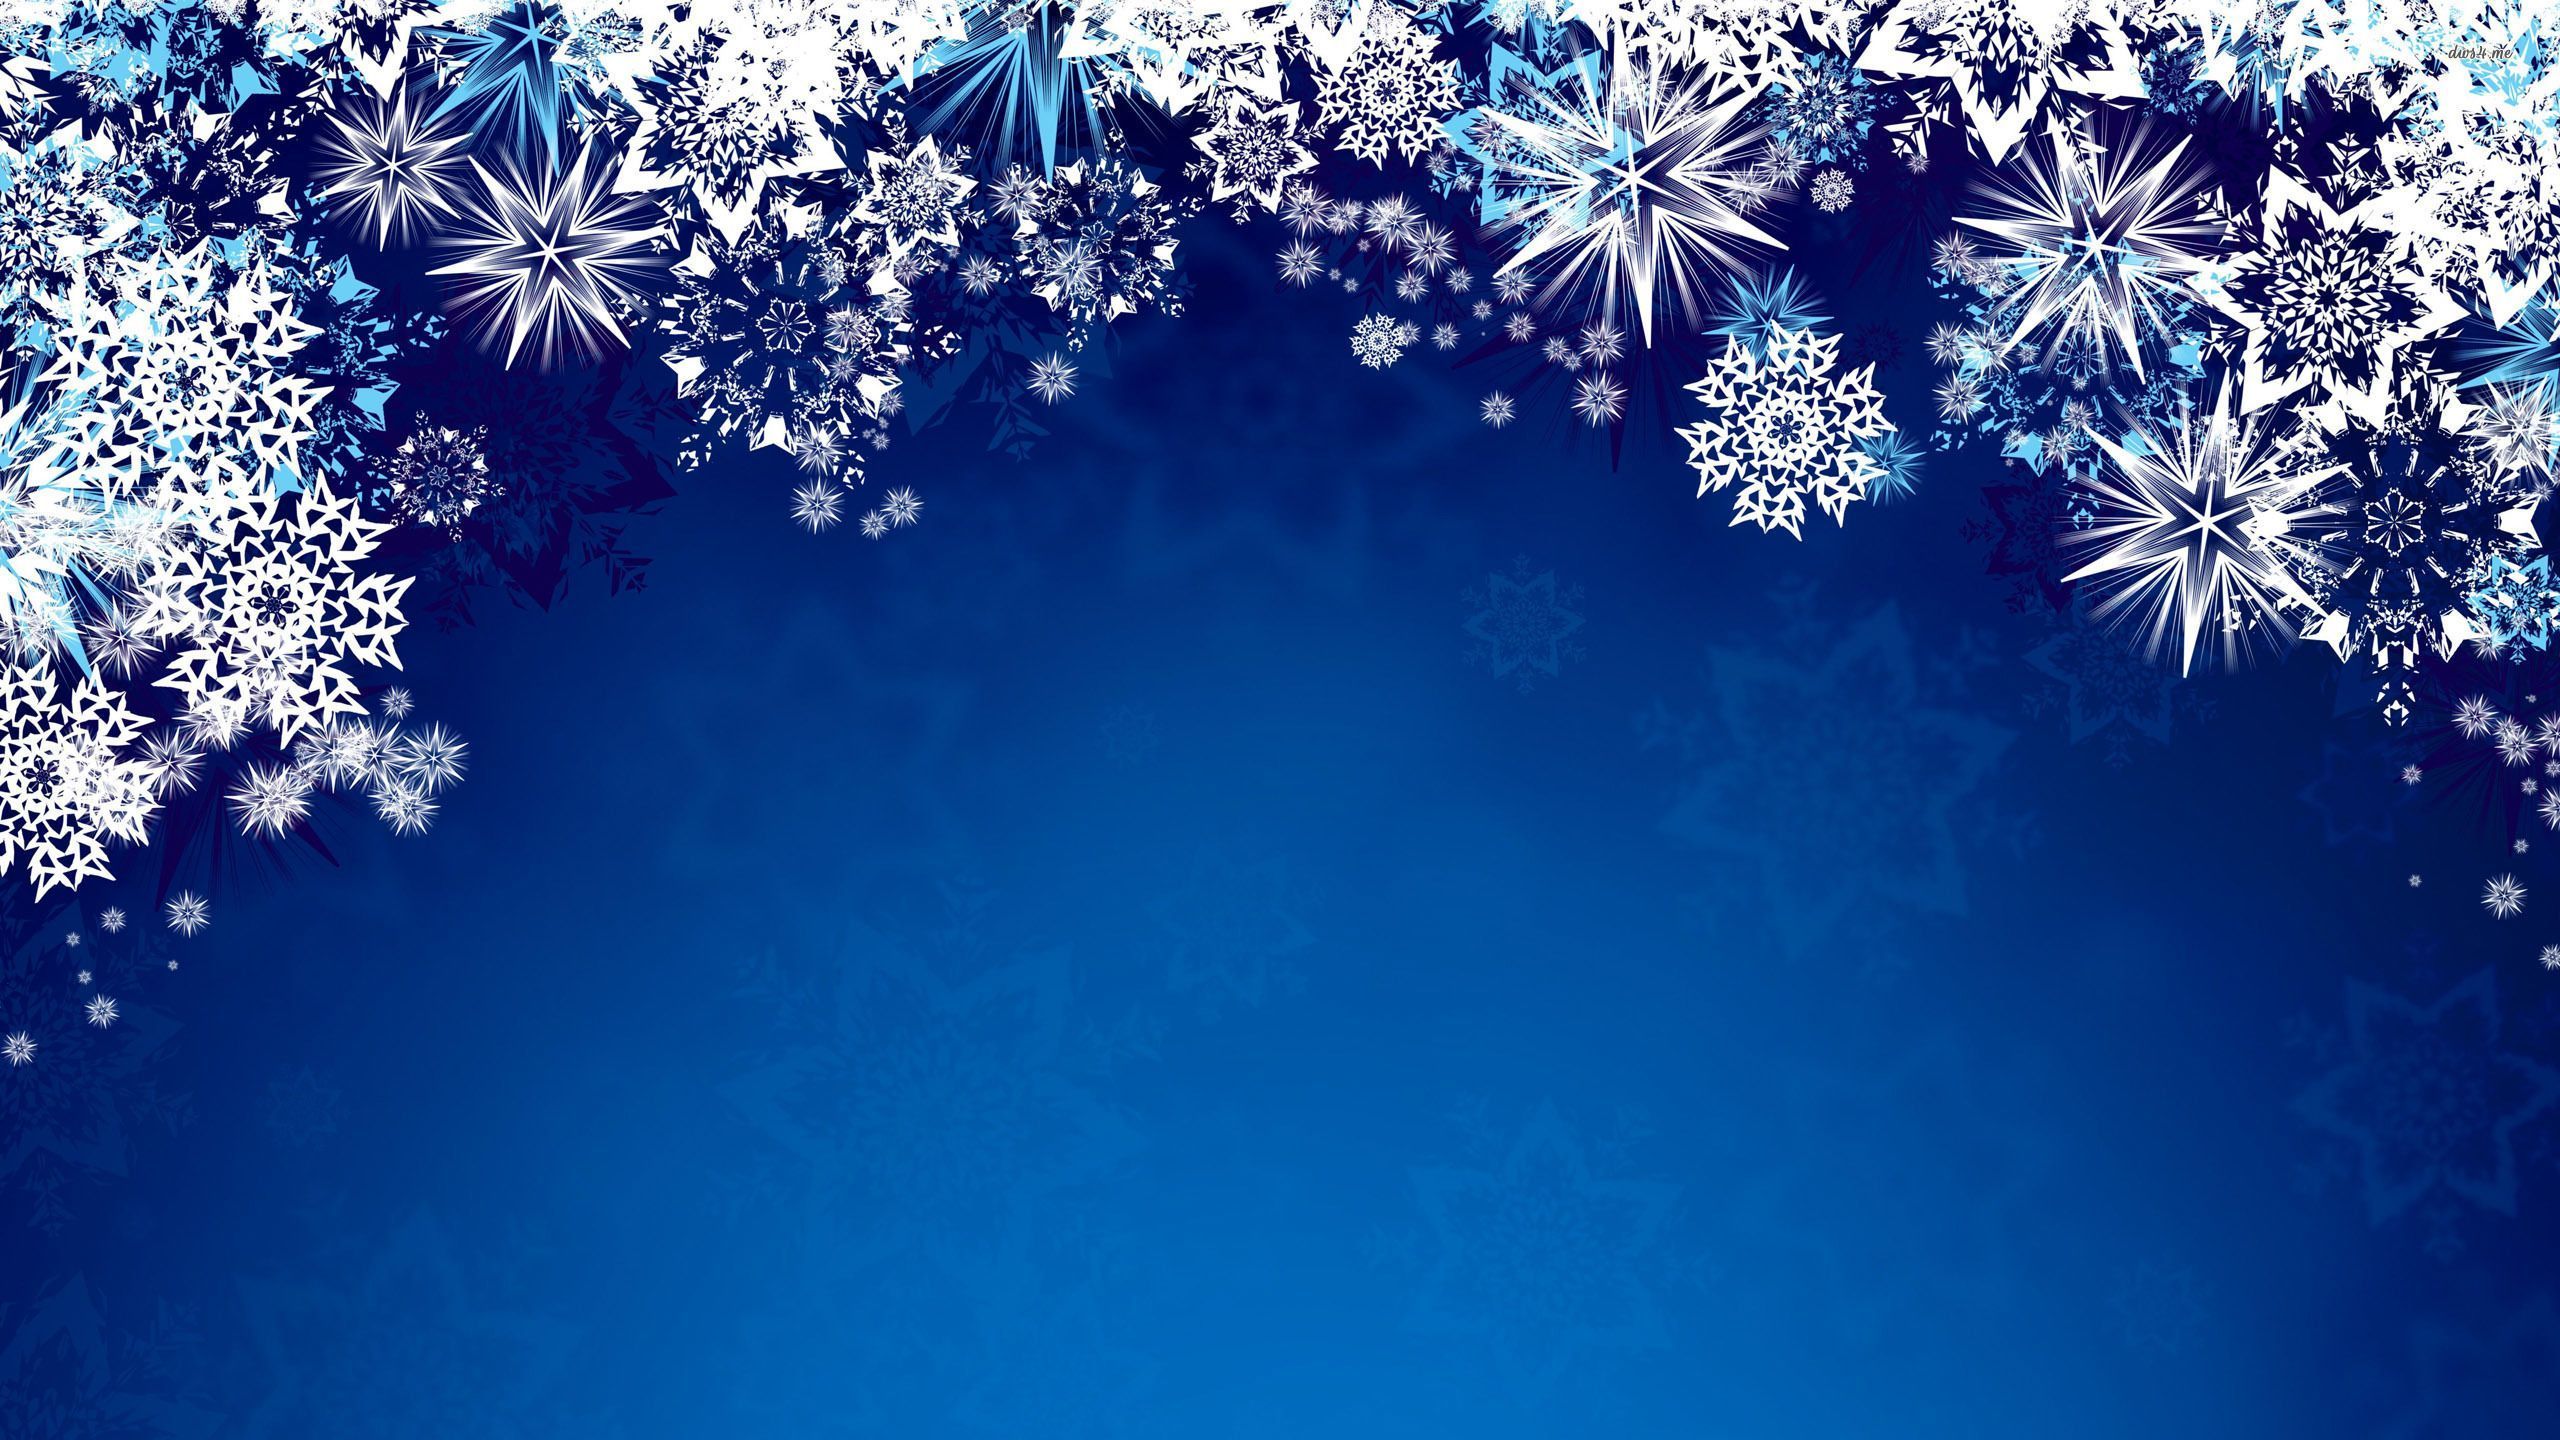 Glowing snowflakes wallpaper - Holiday wallpapers -